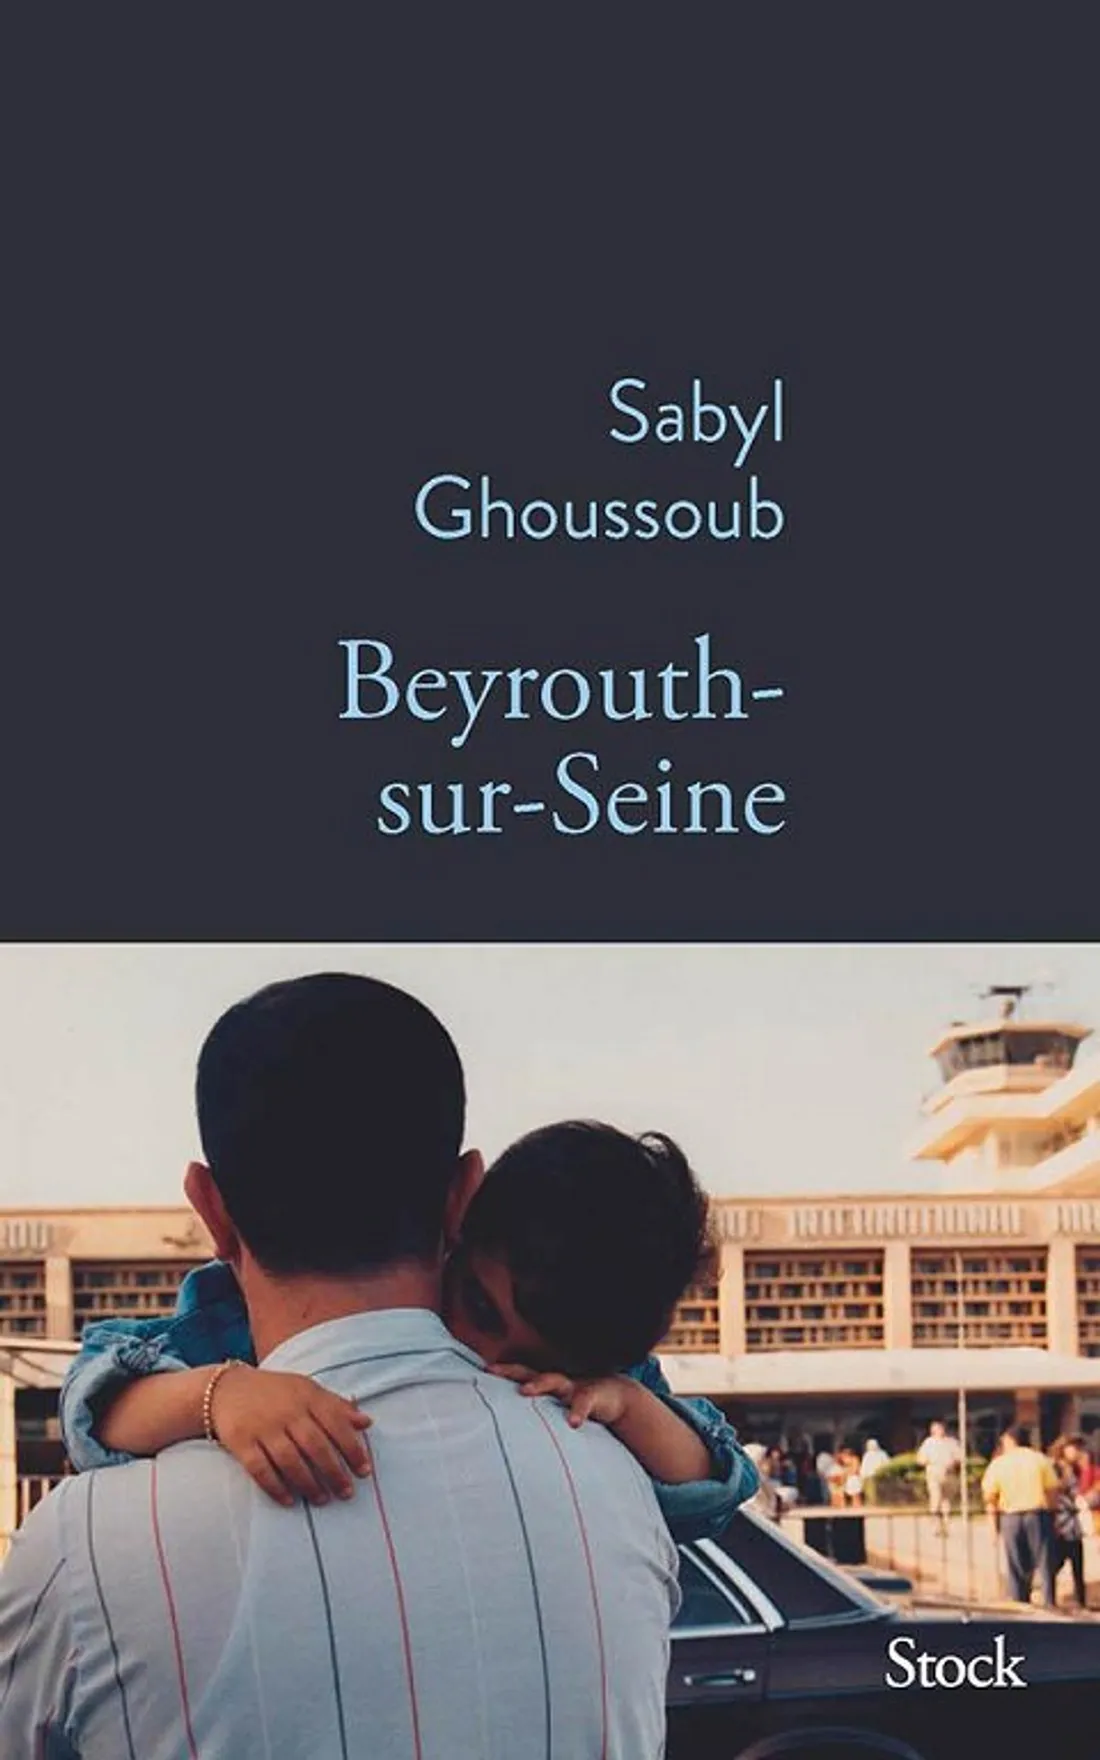 Oeuvre de Sabyl Ghoussoub